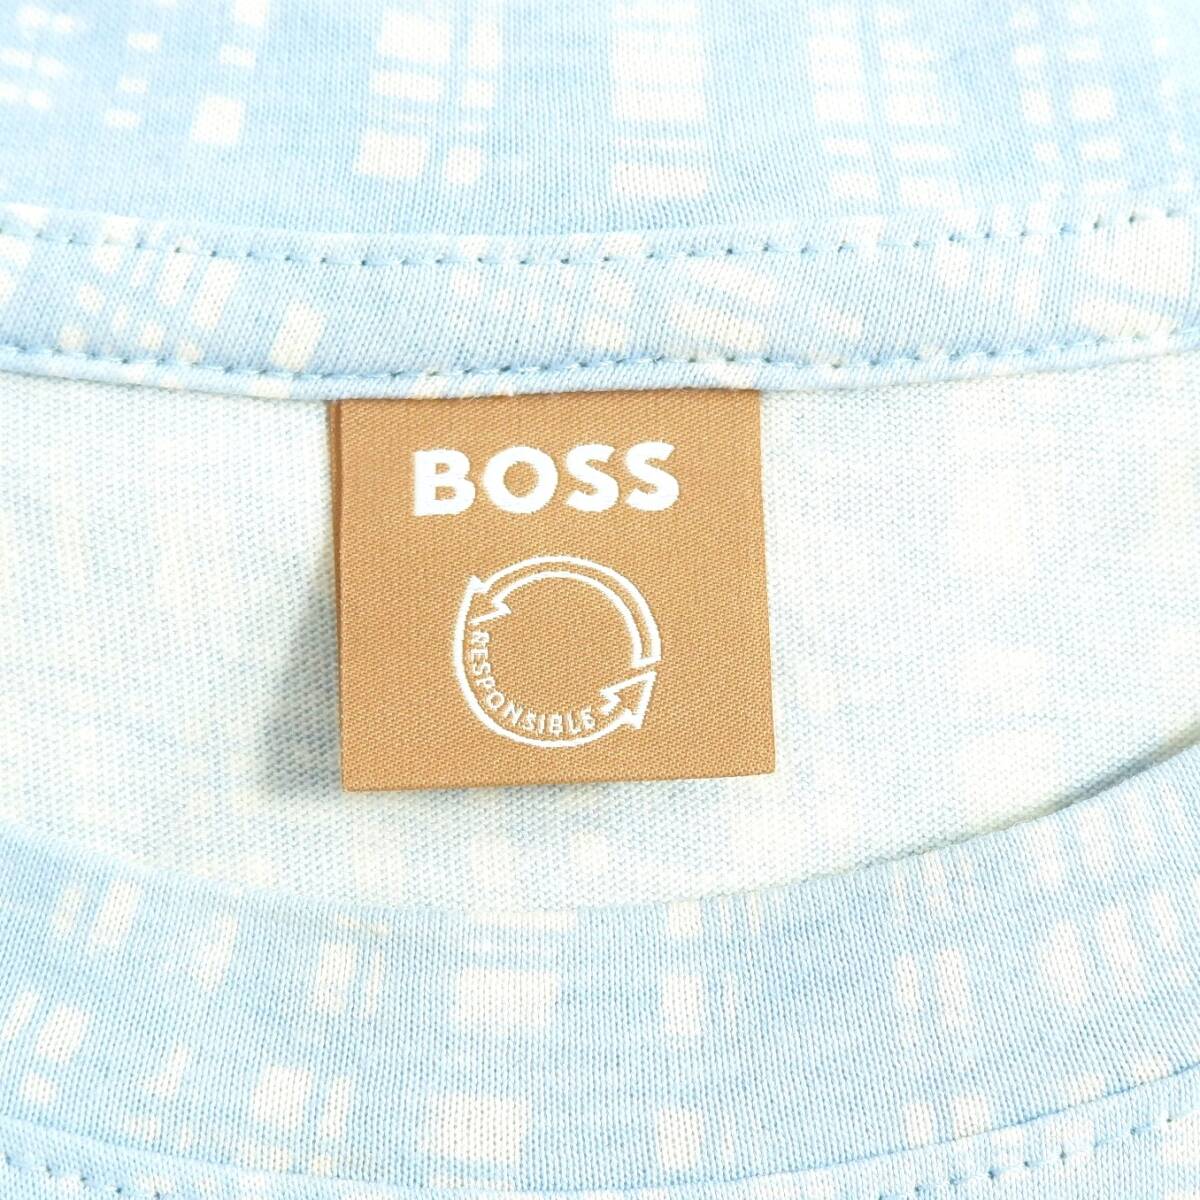 * beautiful goods free shipping * HUGO BOSS Hugo Boss Logo print check short sleeves crew neck T-shirt cut and sewn blue white men's XS 2394B0